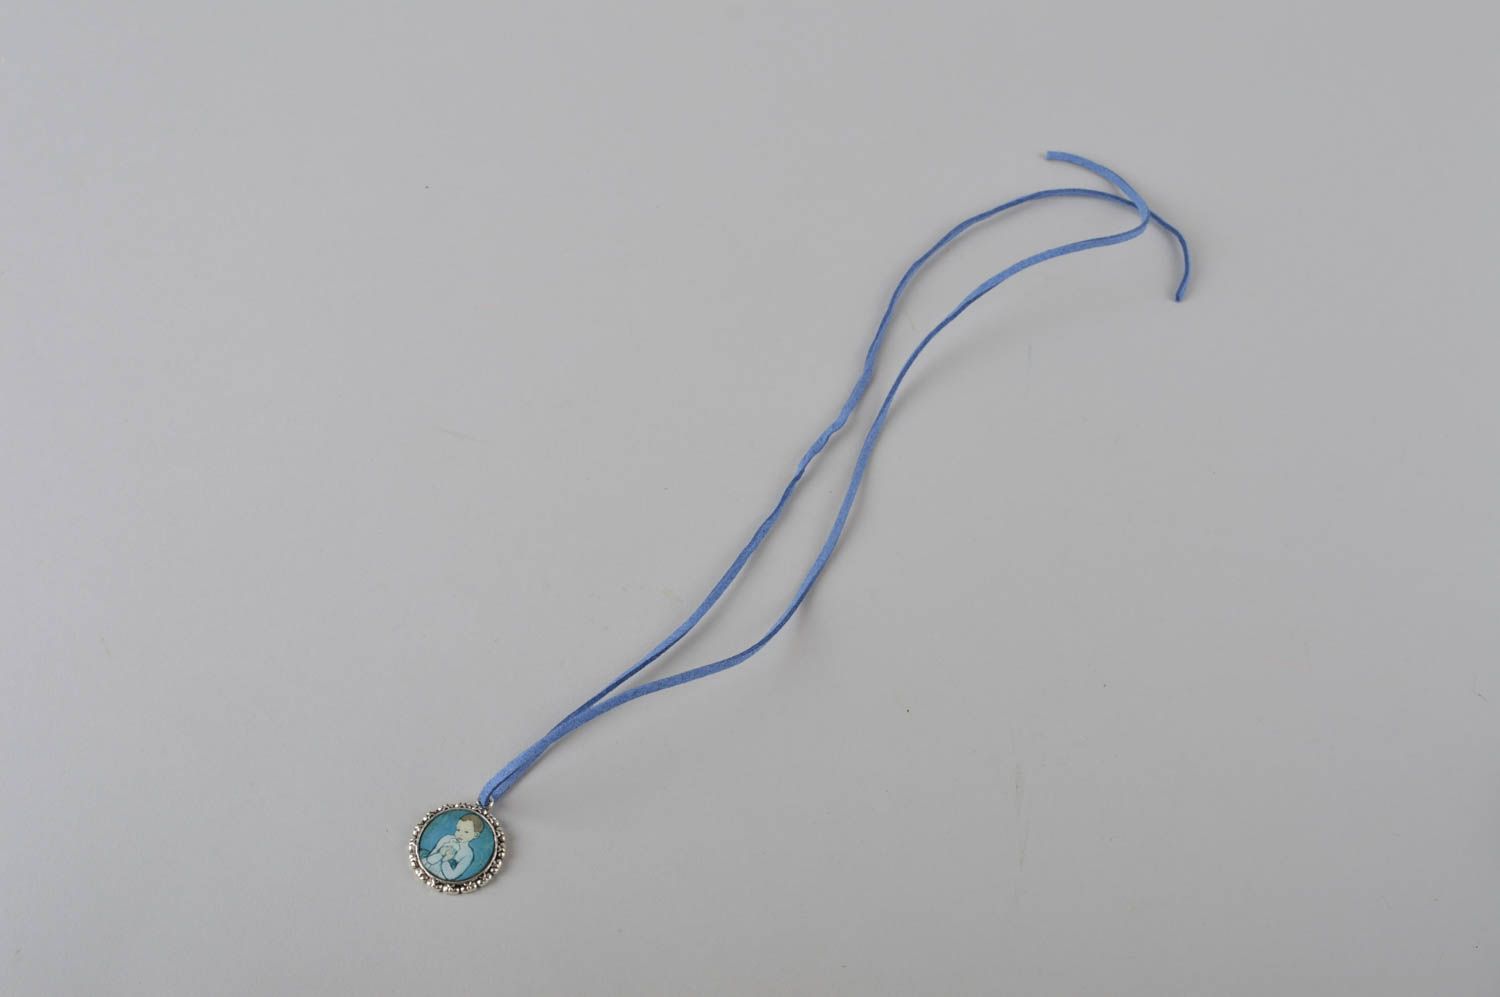 Handmade metal pendant with print designer jewelry pendant on long cord photo 4